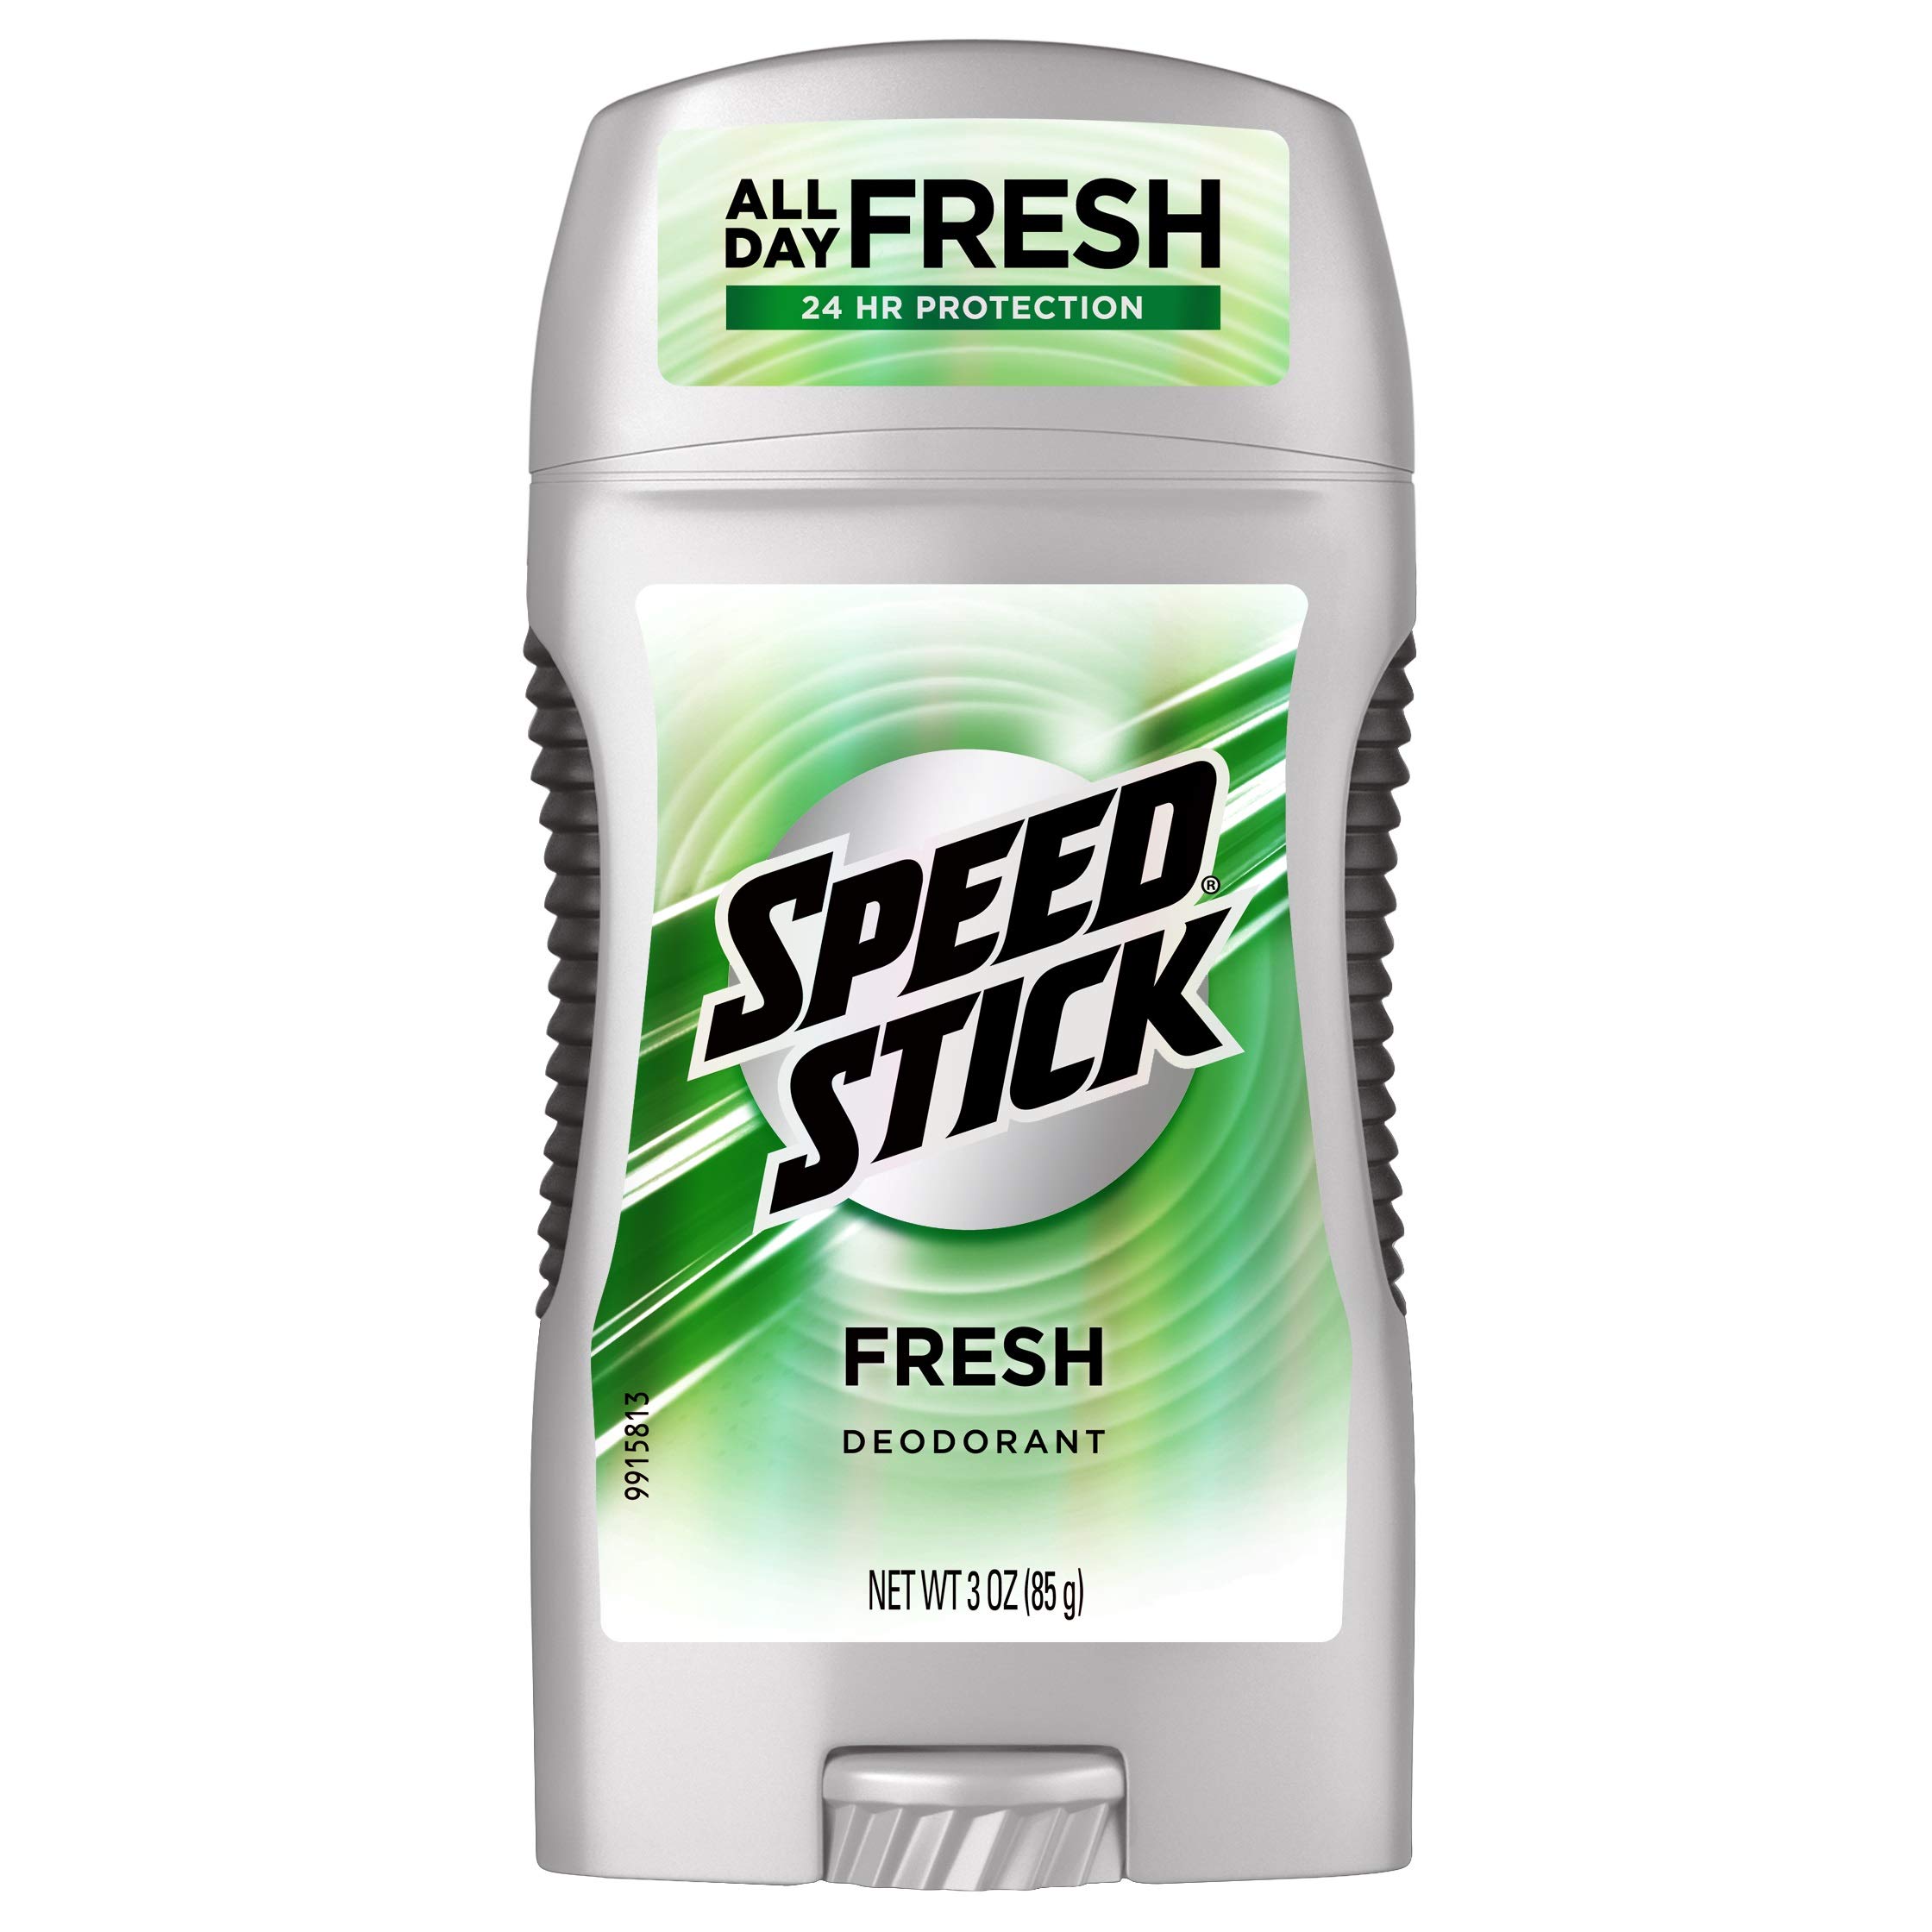 Speed Stick Clear Deodorant Active Fresh - 3 oz - 2 pk by Speed Stick [並行輸入